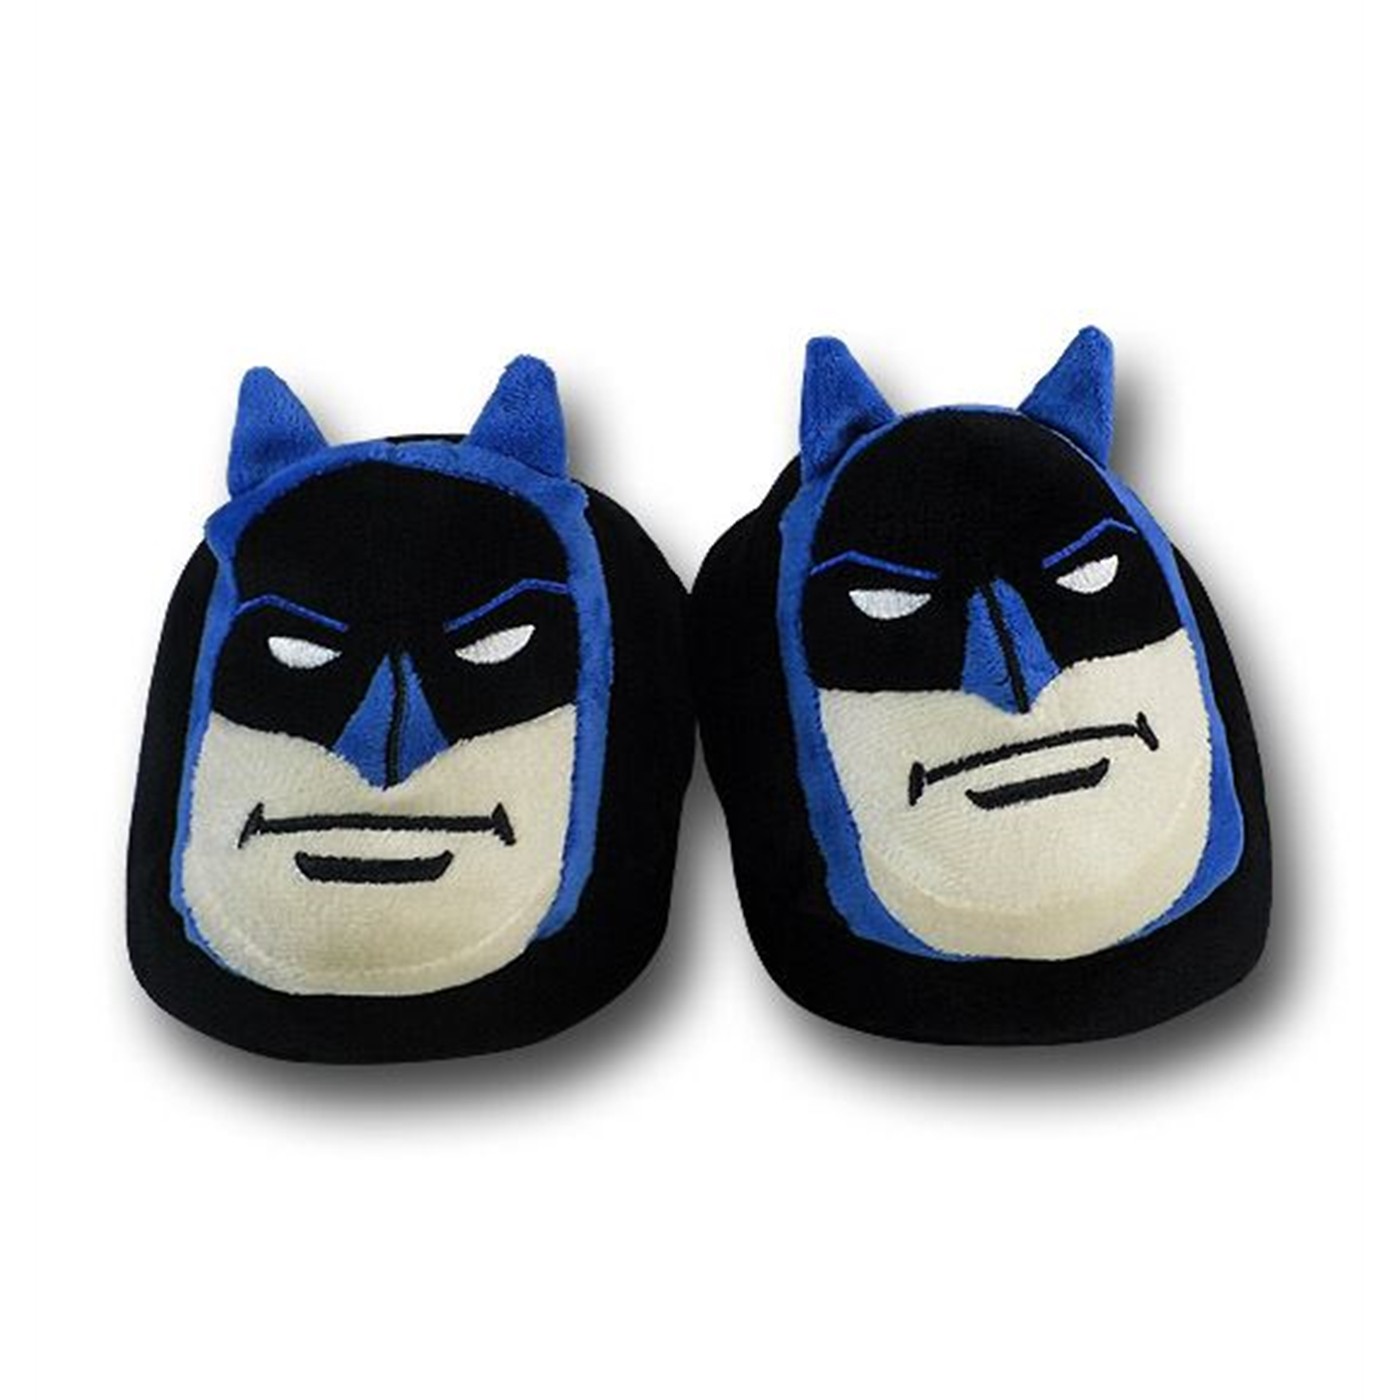 Batman 3D Image Slippers